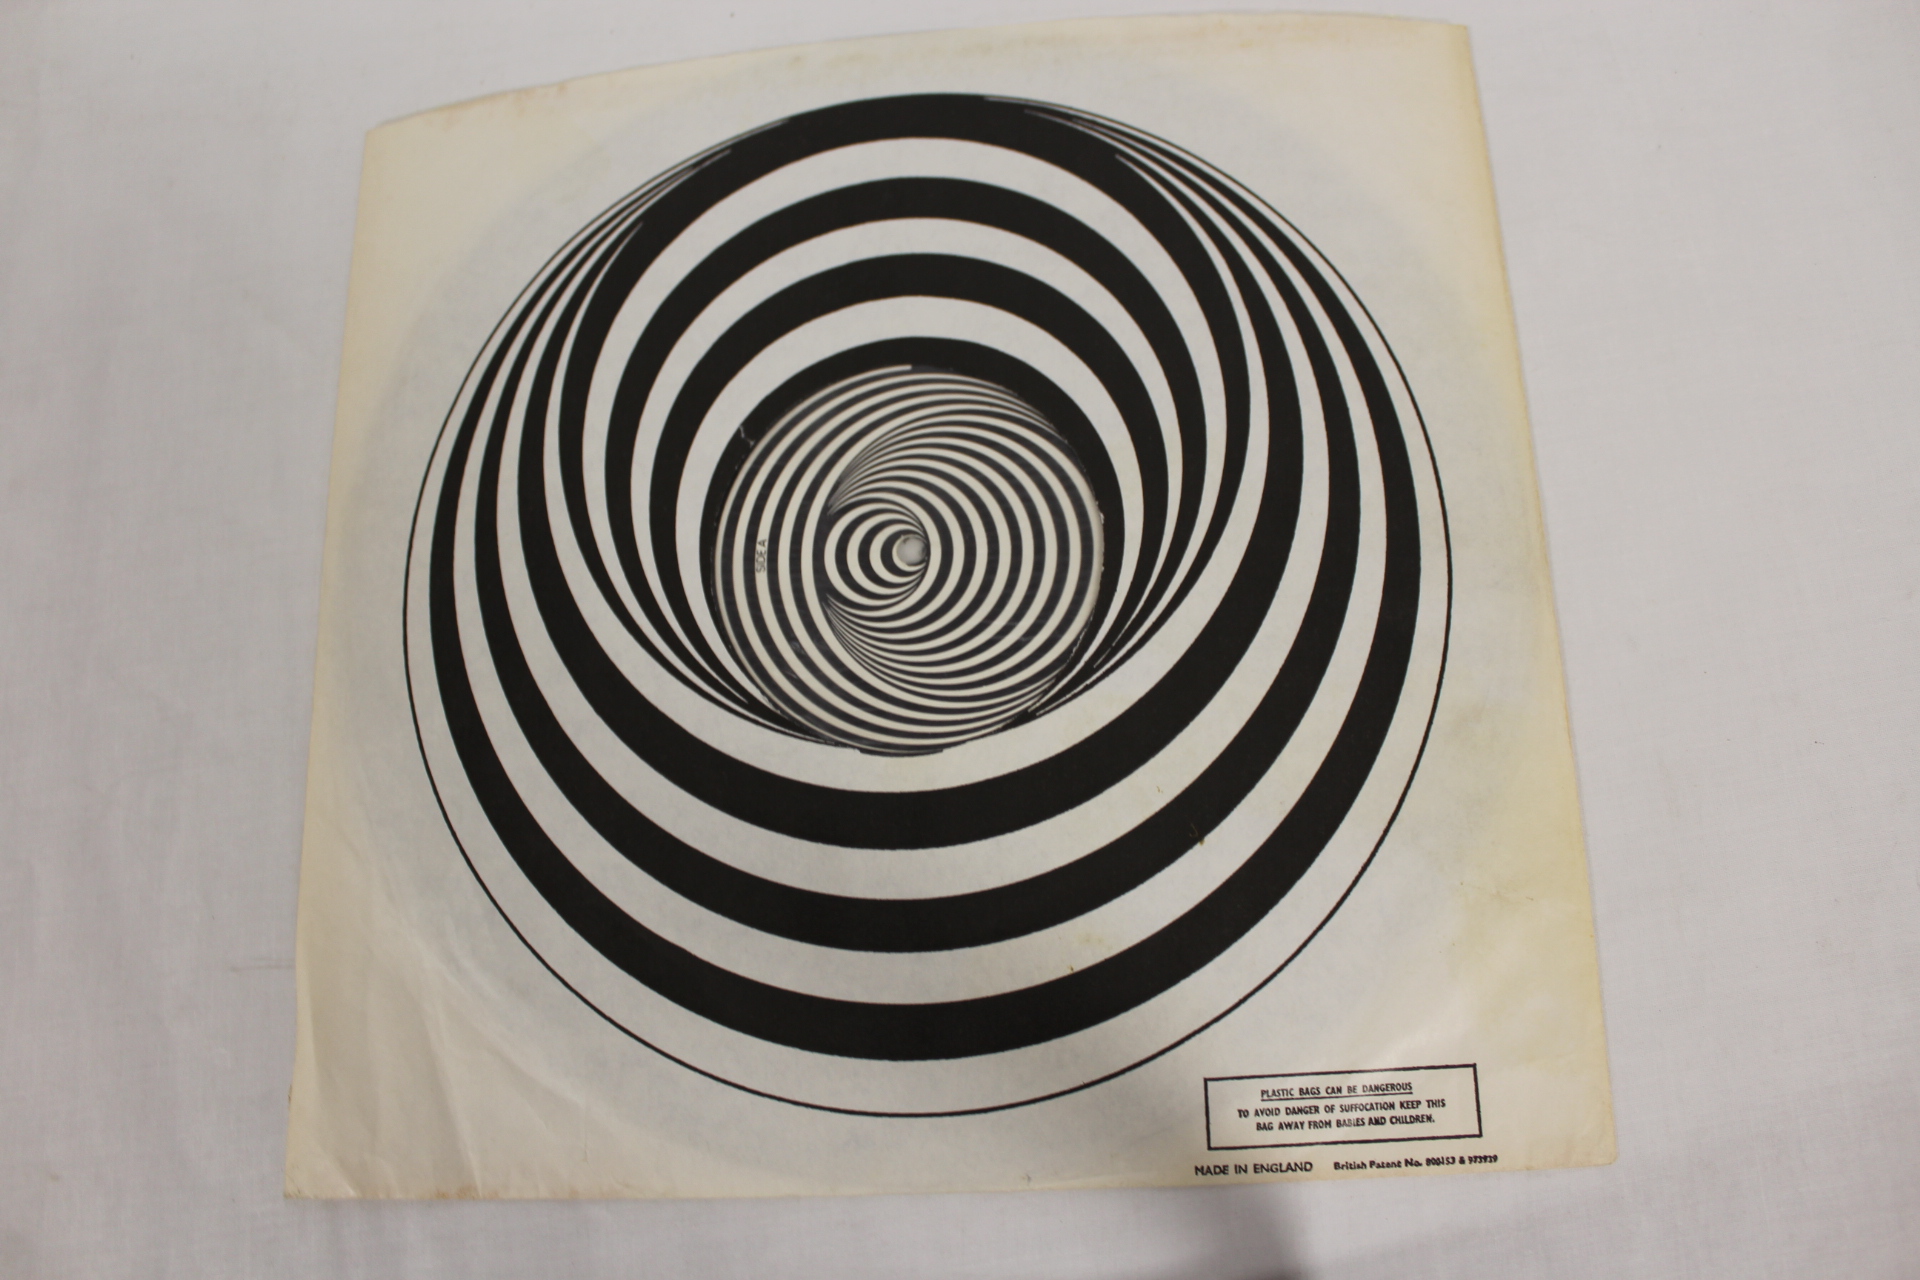 Rock/Pop LPs to include Rod Stewart of swirl Vertigo, Gnidrolog (lattice sleeve), Roy Wood, Hollies, - Image 11 of 11